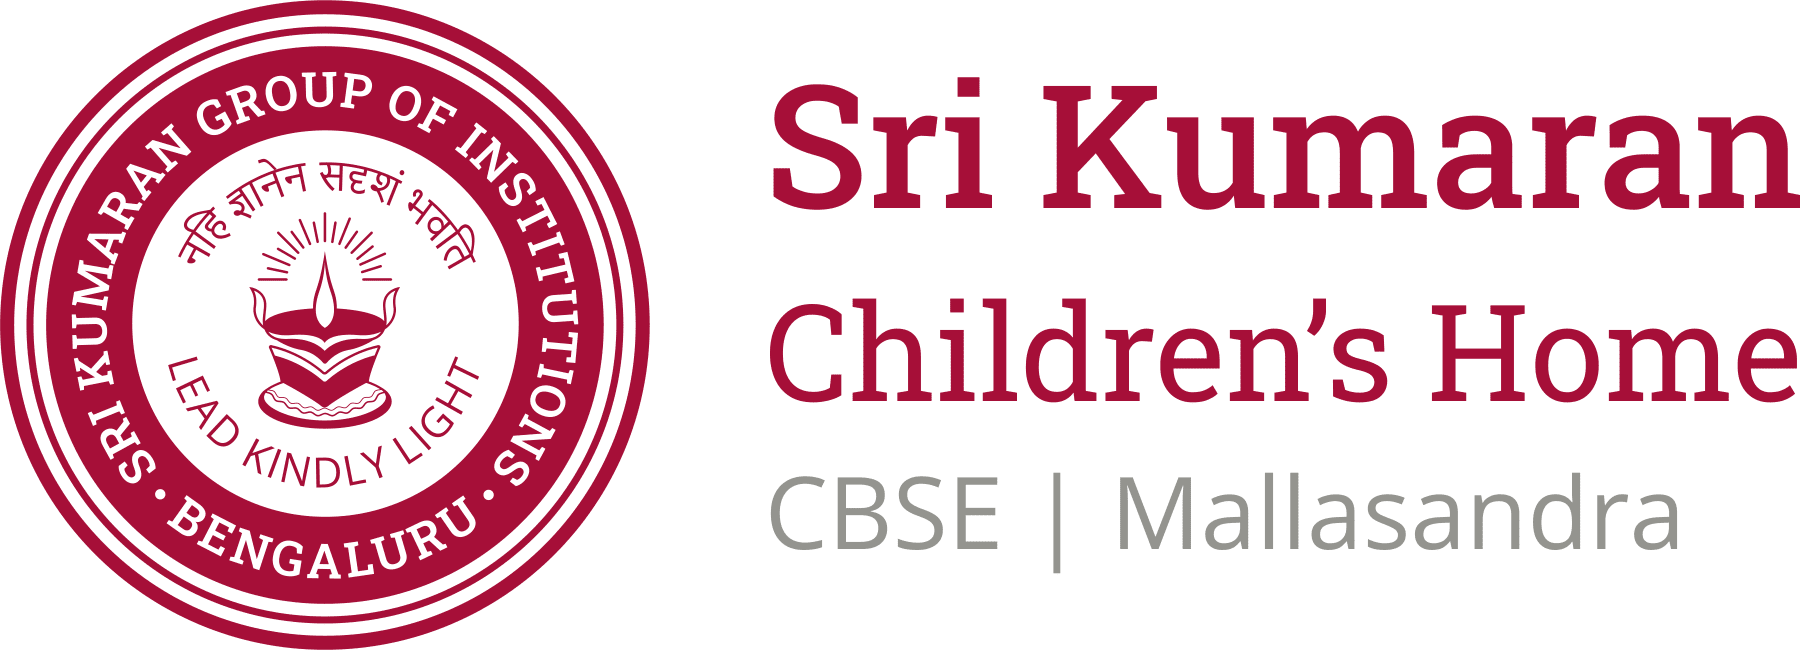 Sri Kumaran Childrens Home - CBSE | Mallasandra